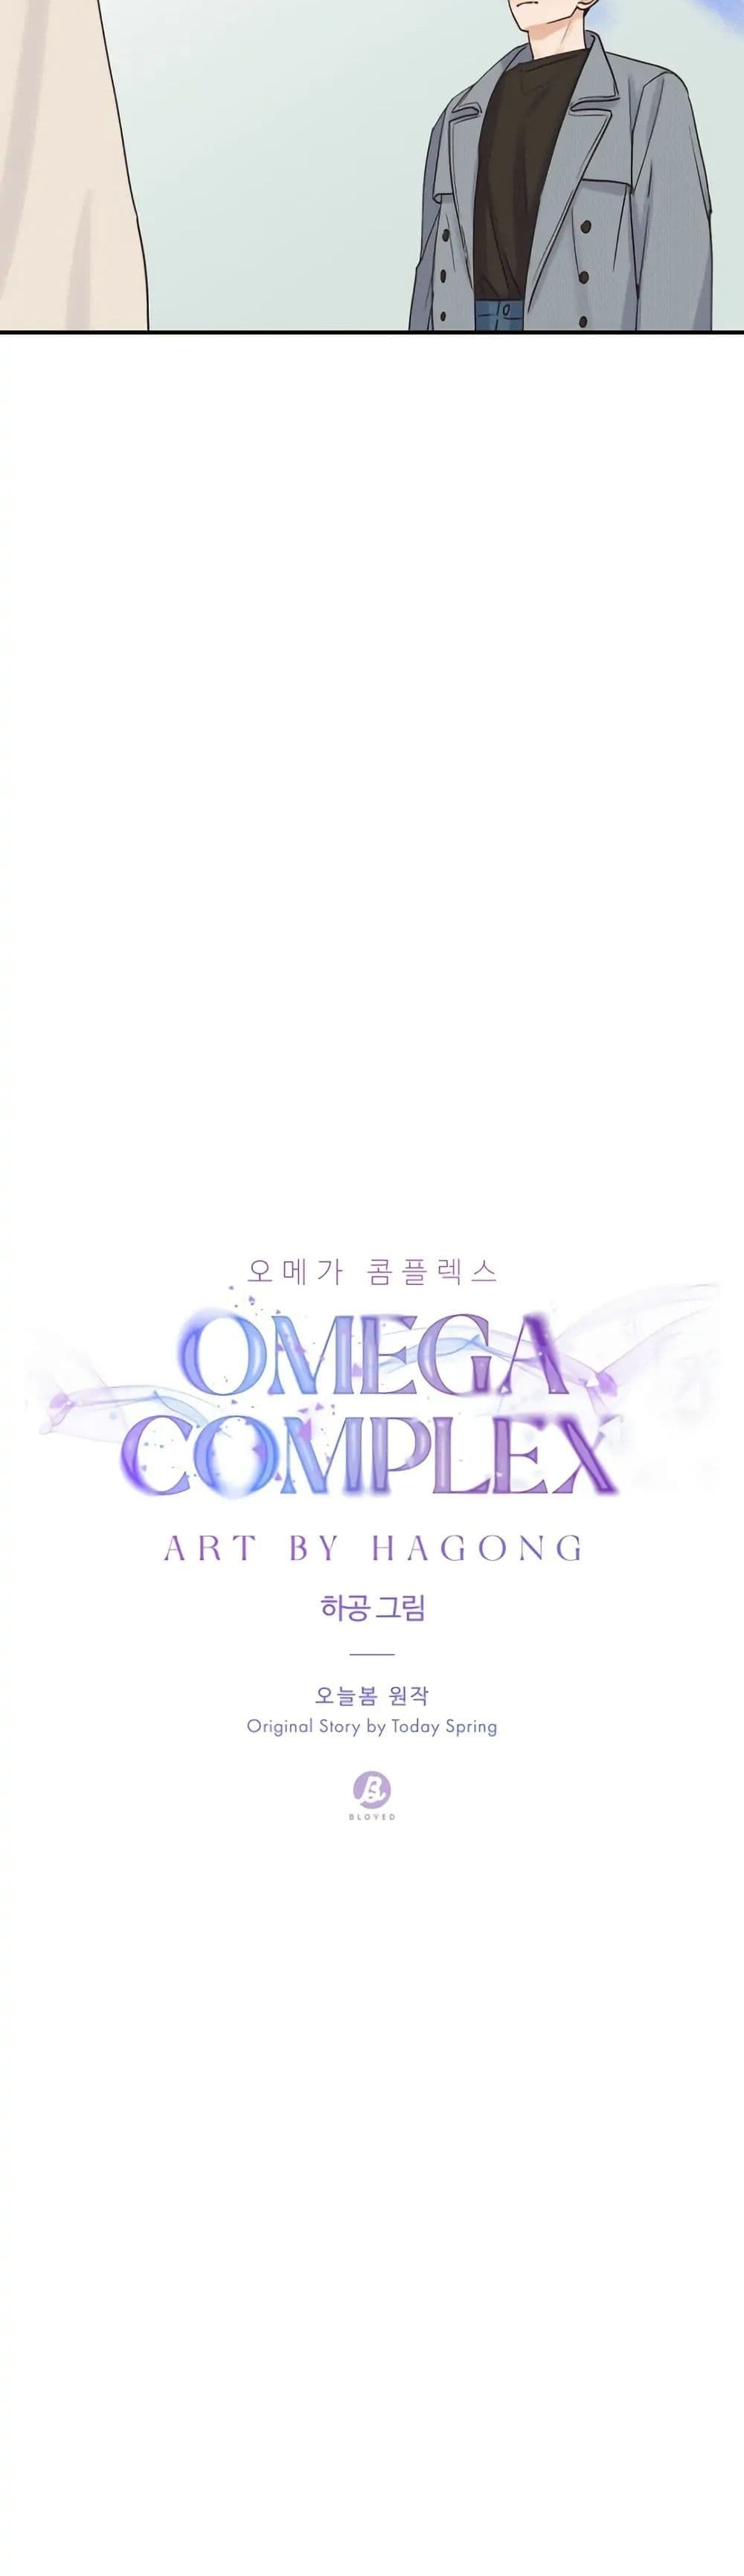 Omega Complex 16 08